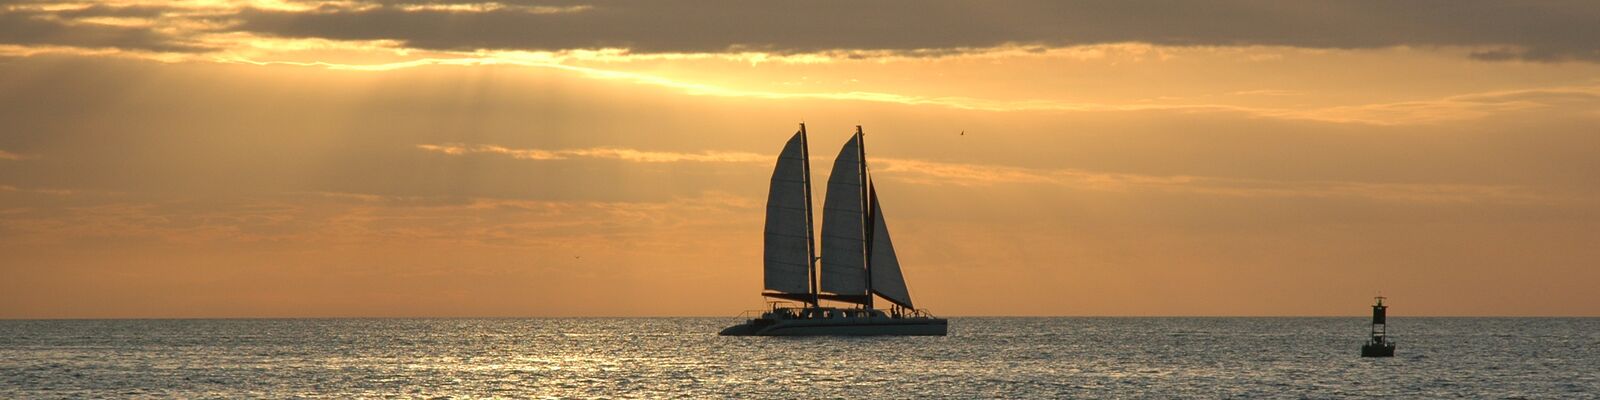 Segelboot im Sonnenunterang am Key West